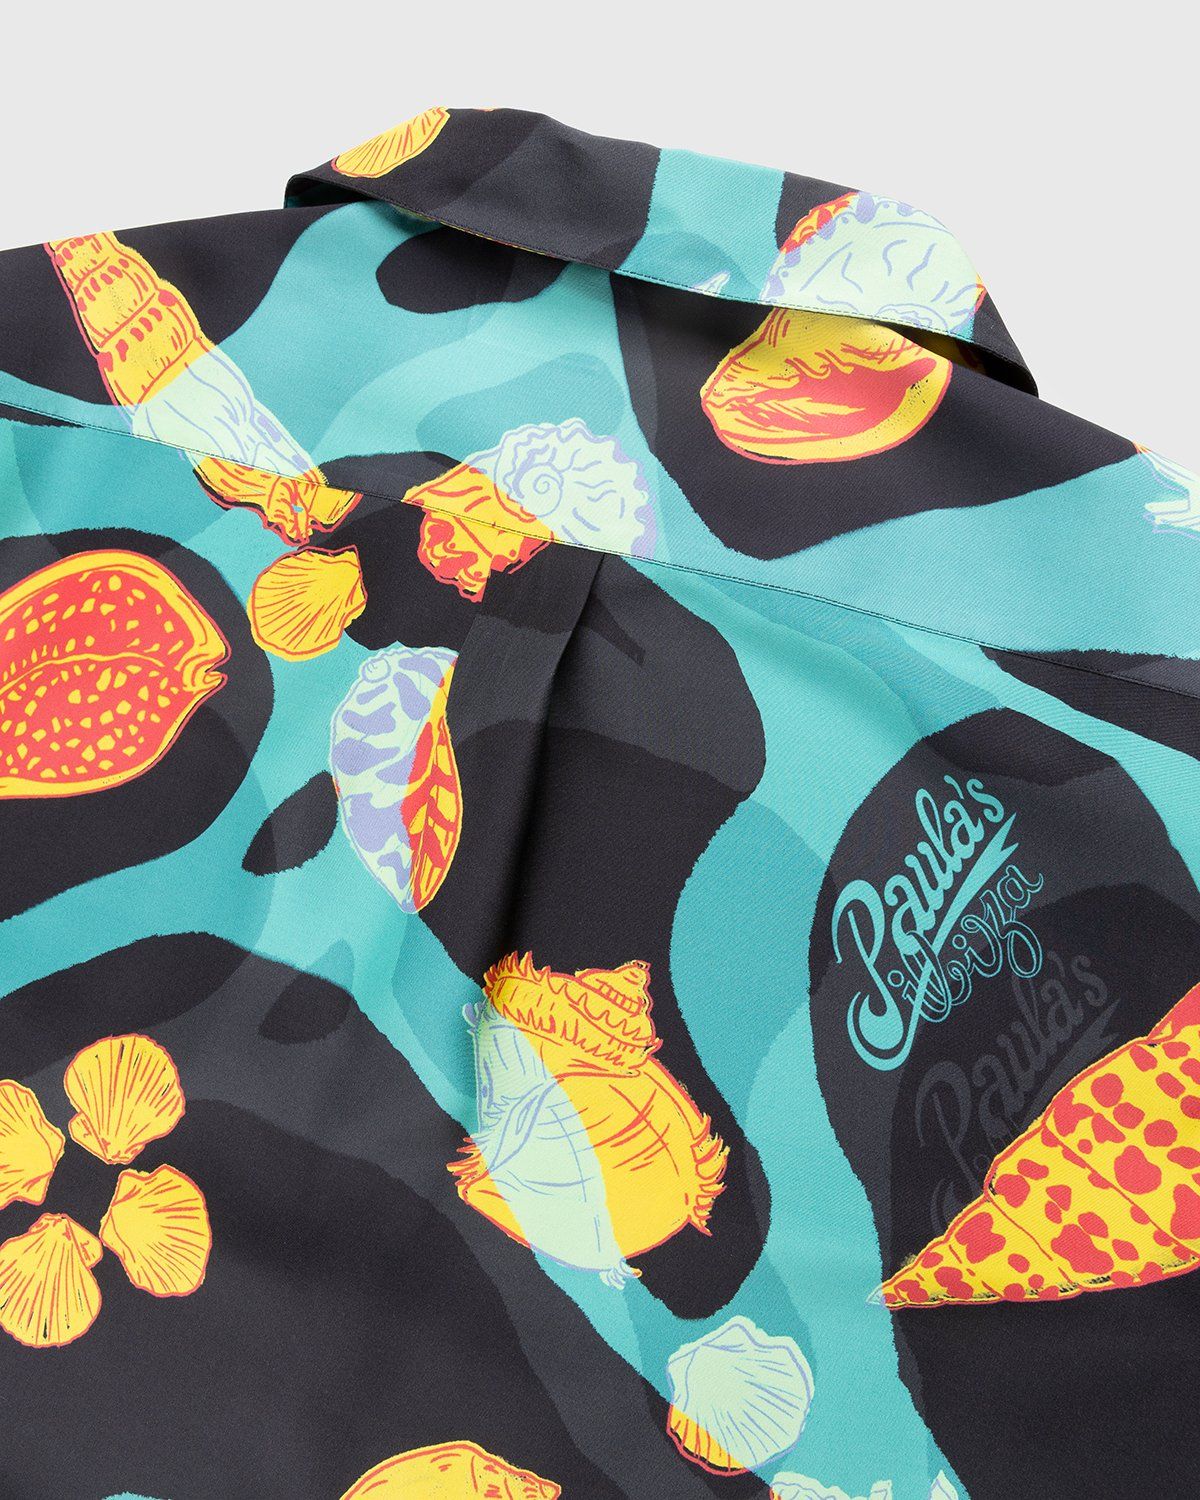 Loewe – Paula's Ibiza Shell Print Bowling Shirt Black - Shirts - Multi - Image 3